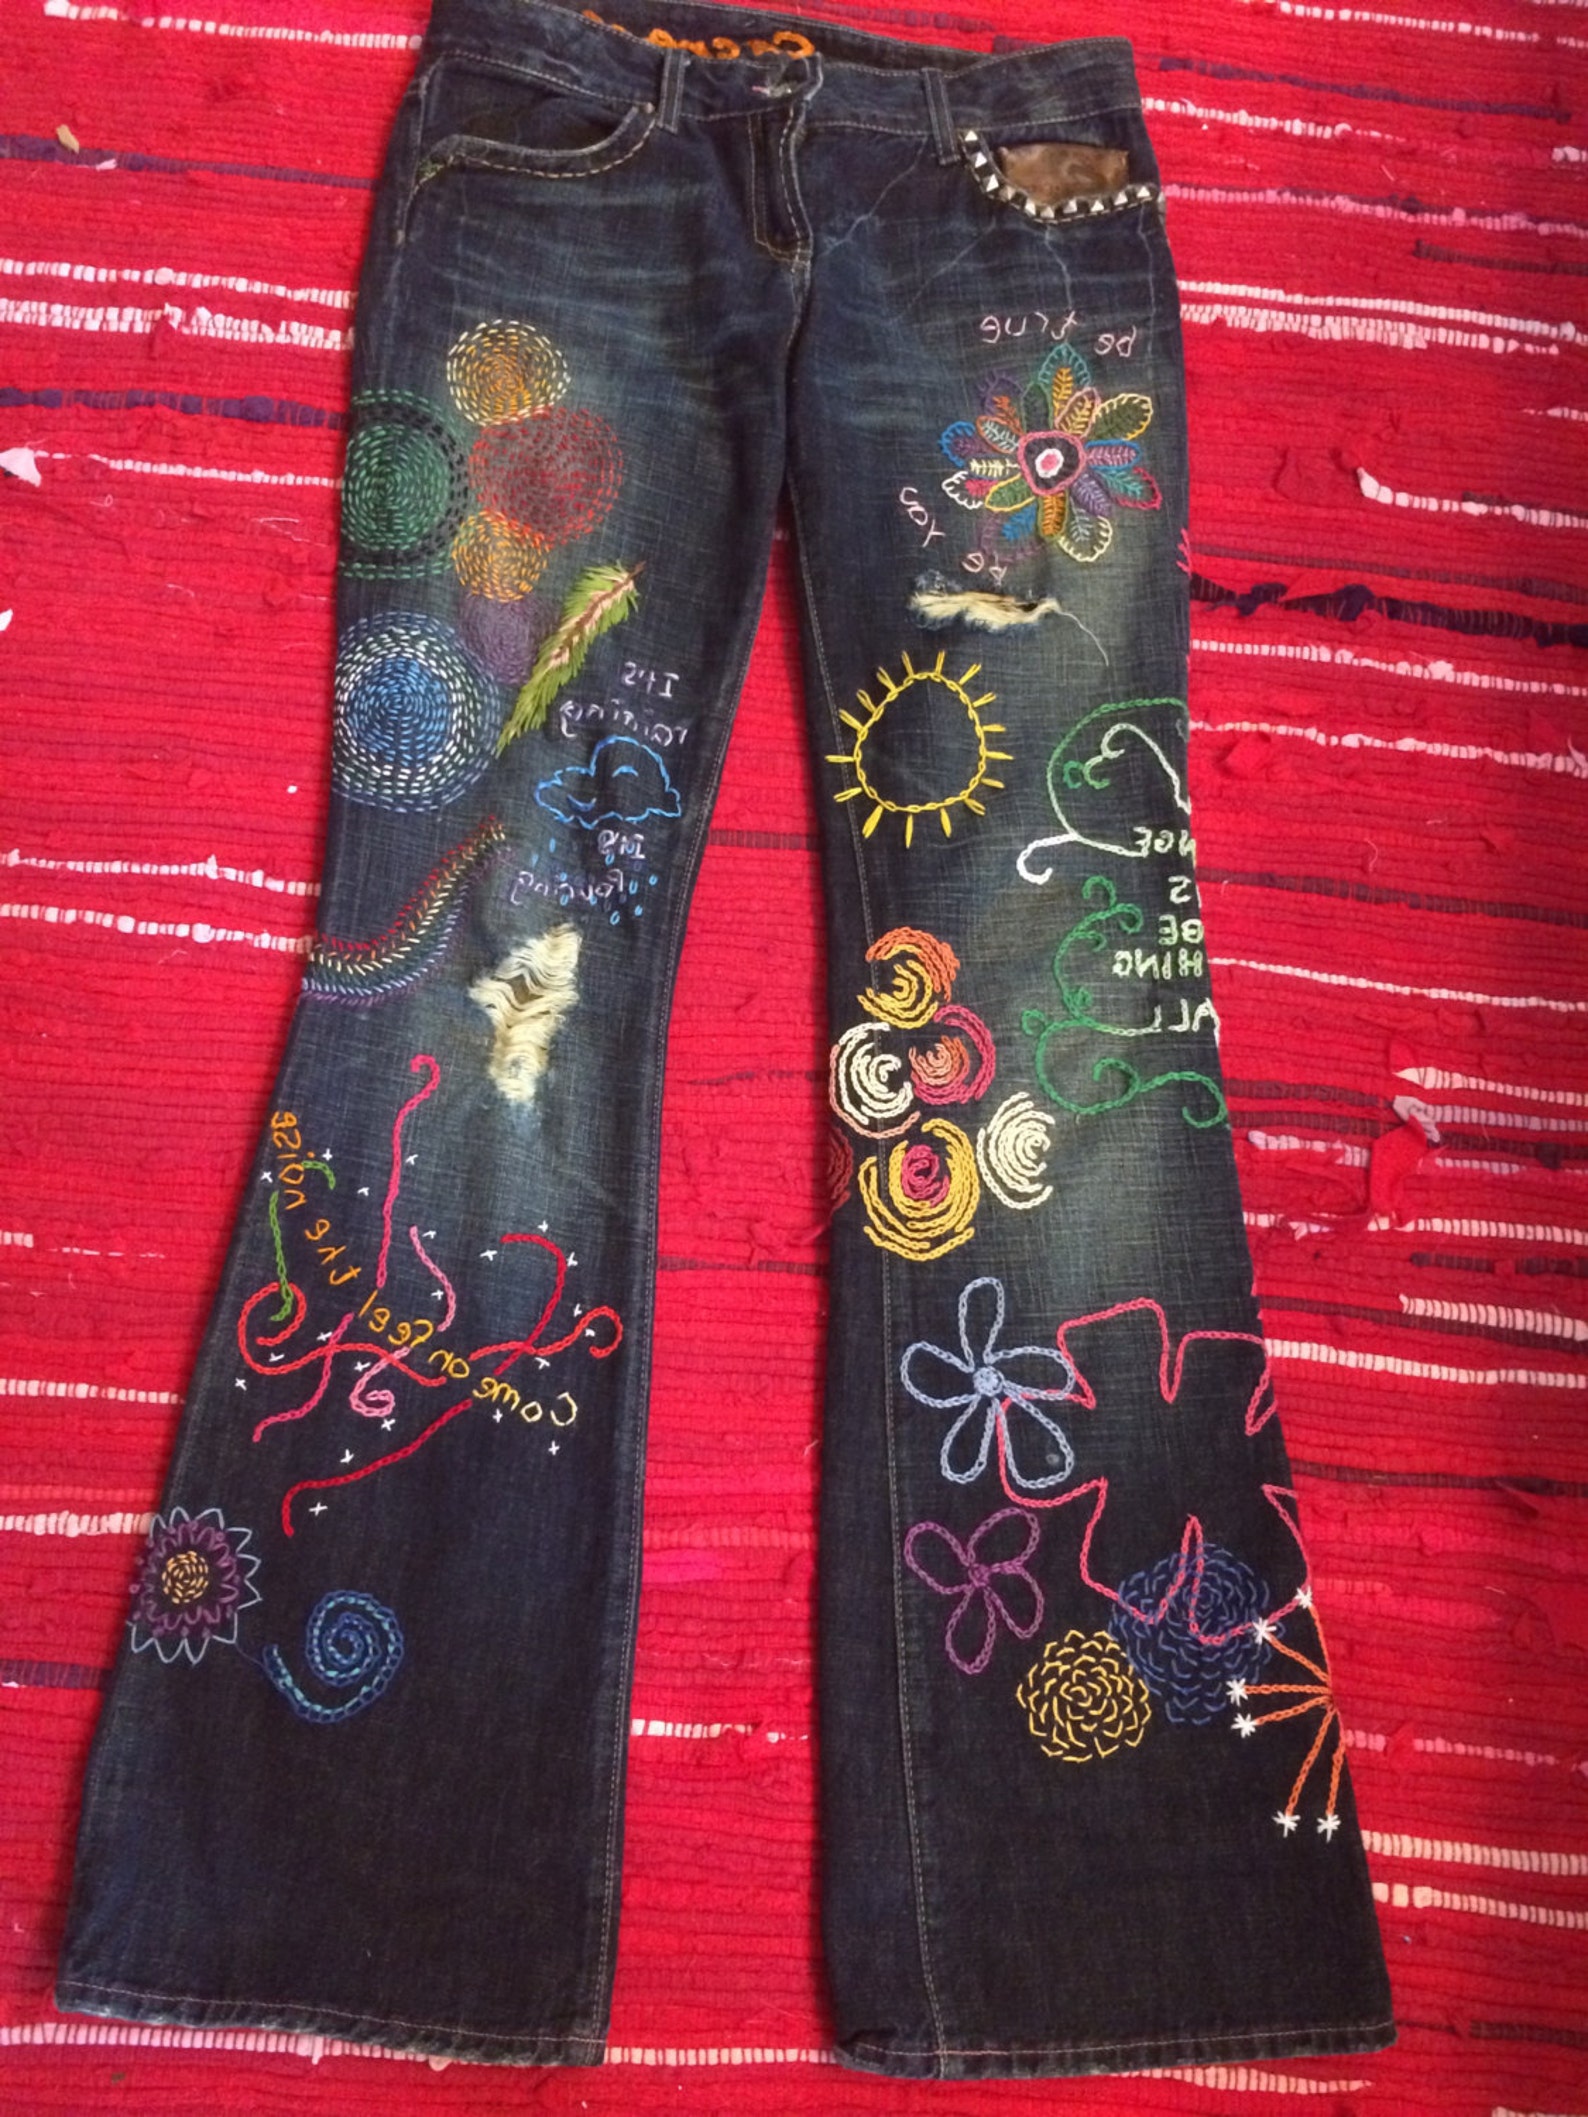 Boho Festival Free Form Embroidery Art Jeans | Etsy